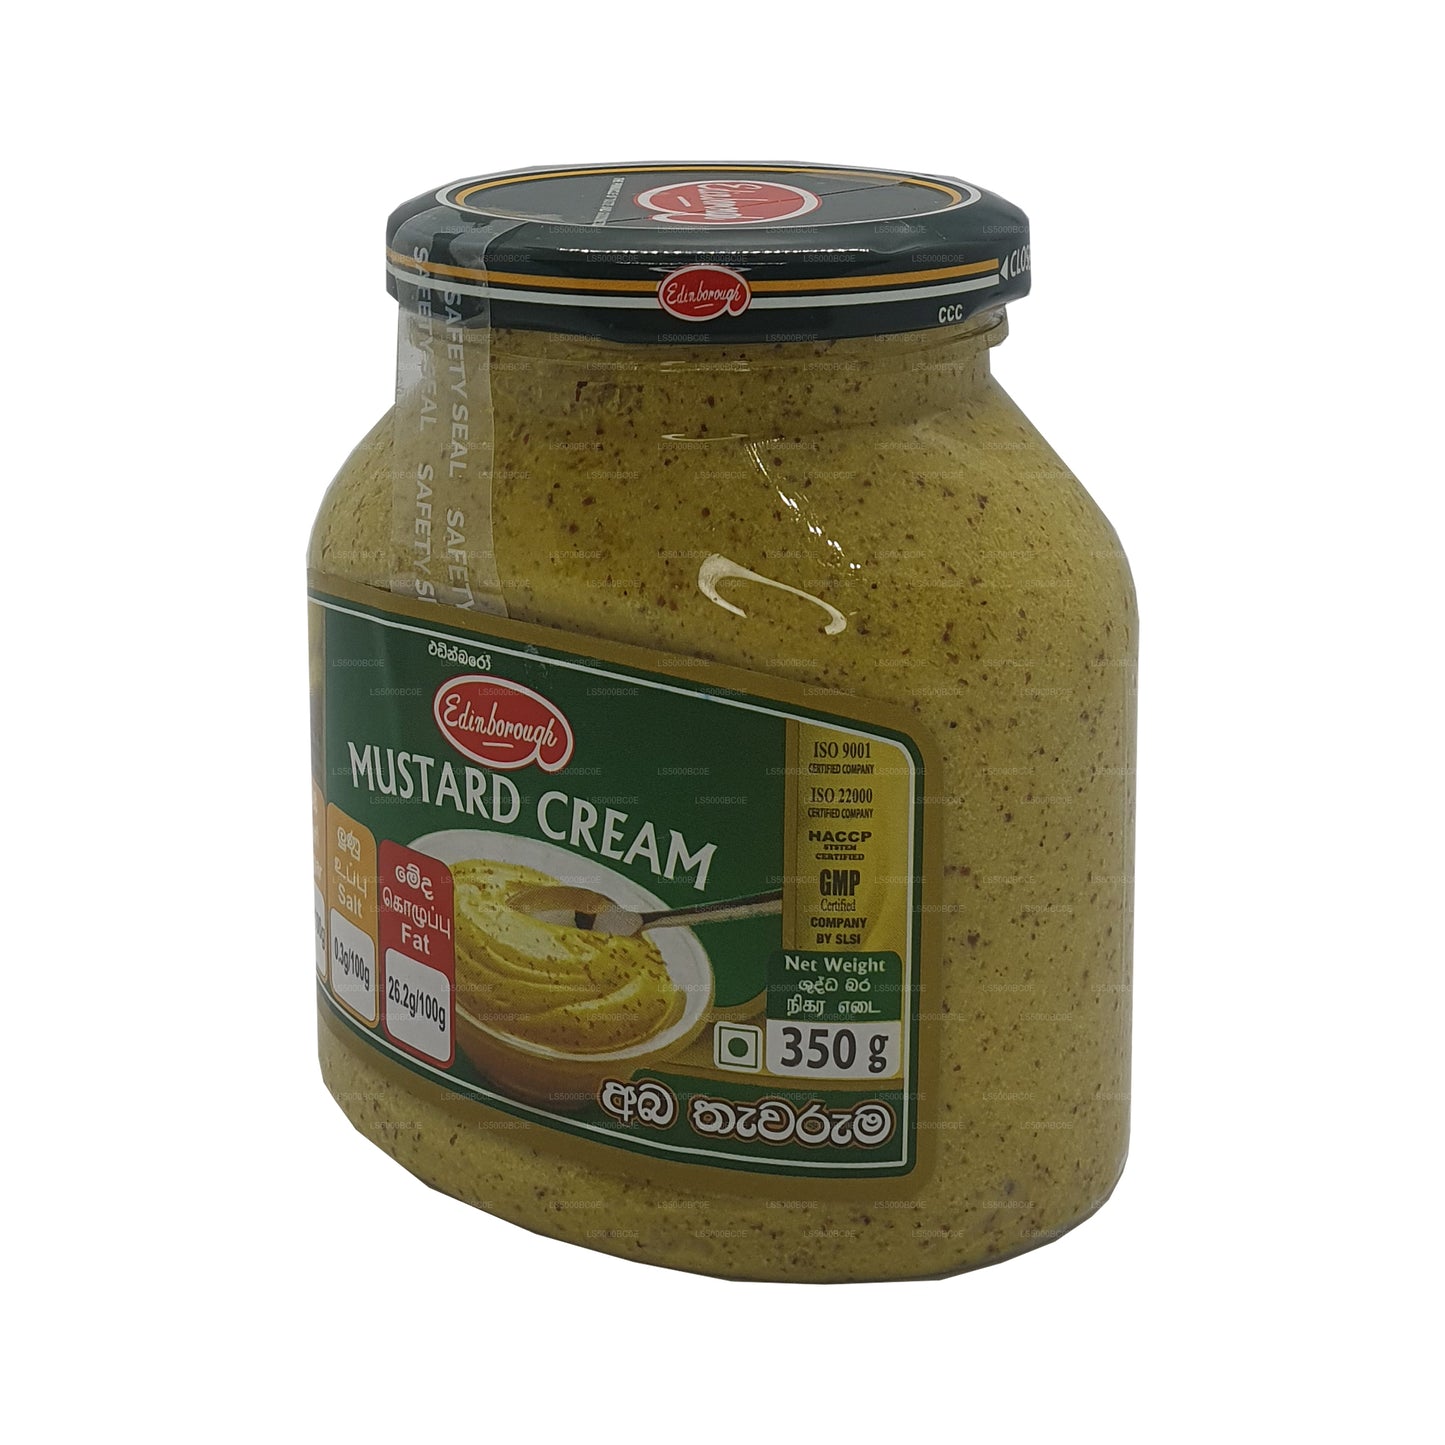 Edinhorough senapskräm (350 g)